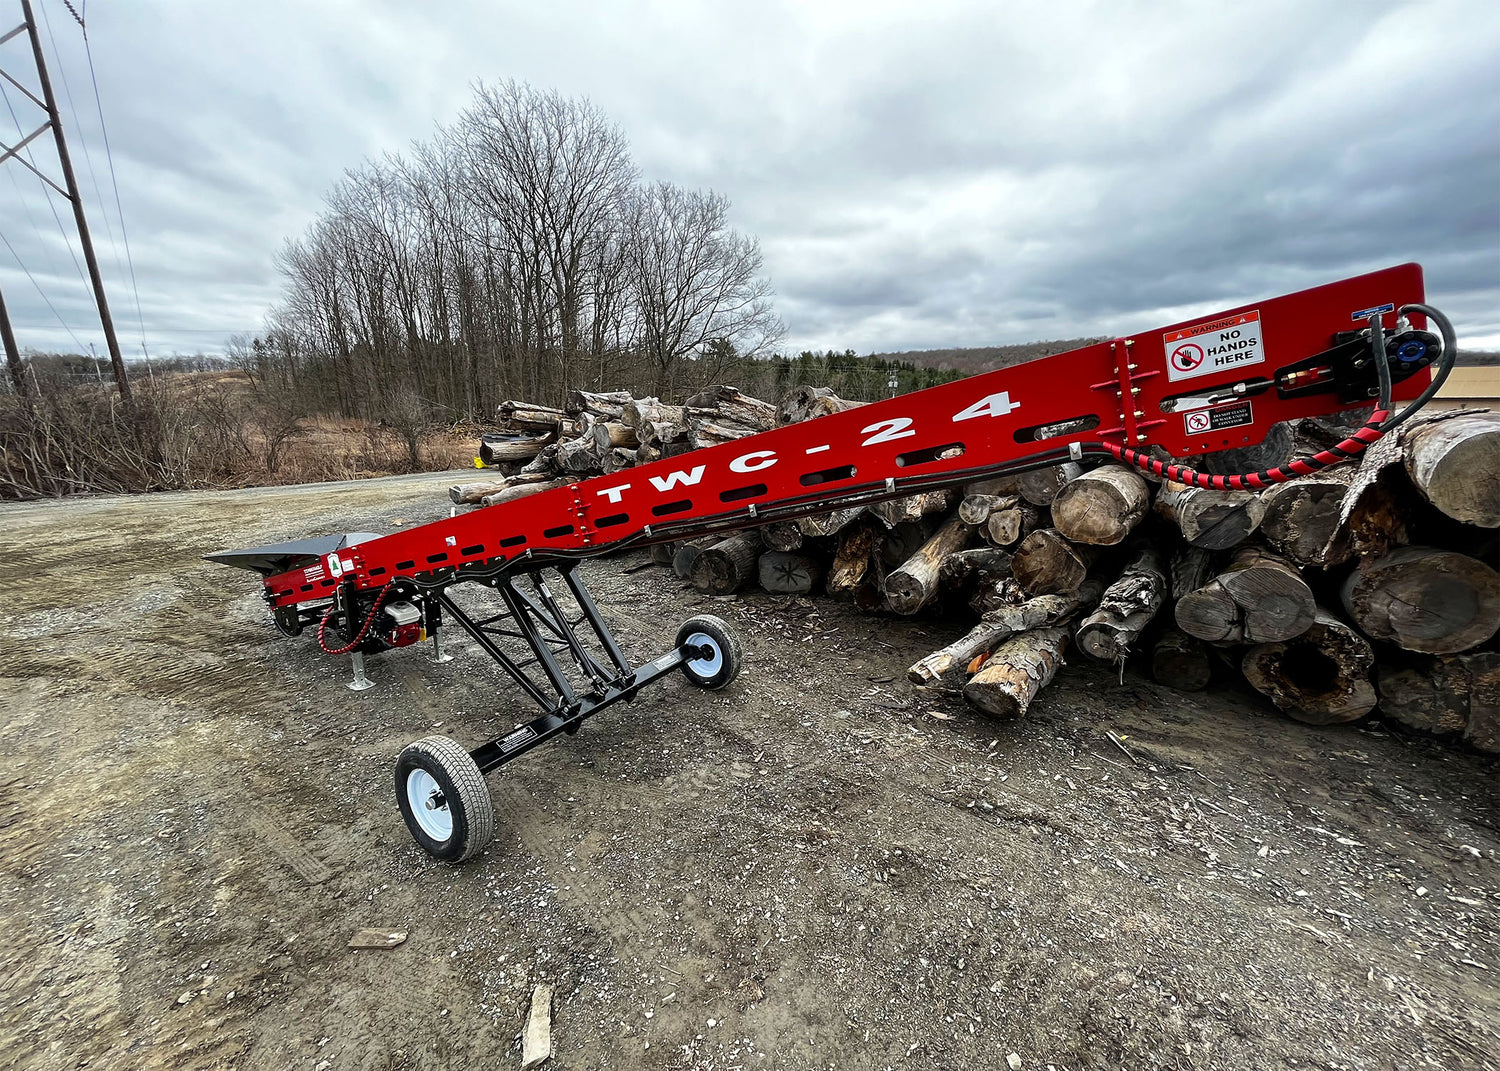 24 foot firewood conveyor